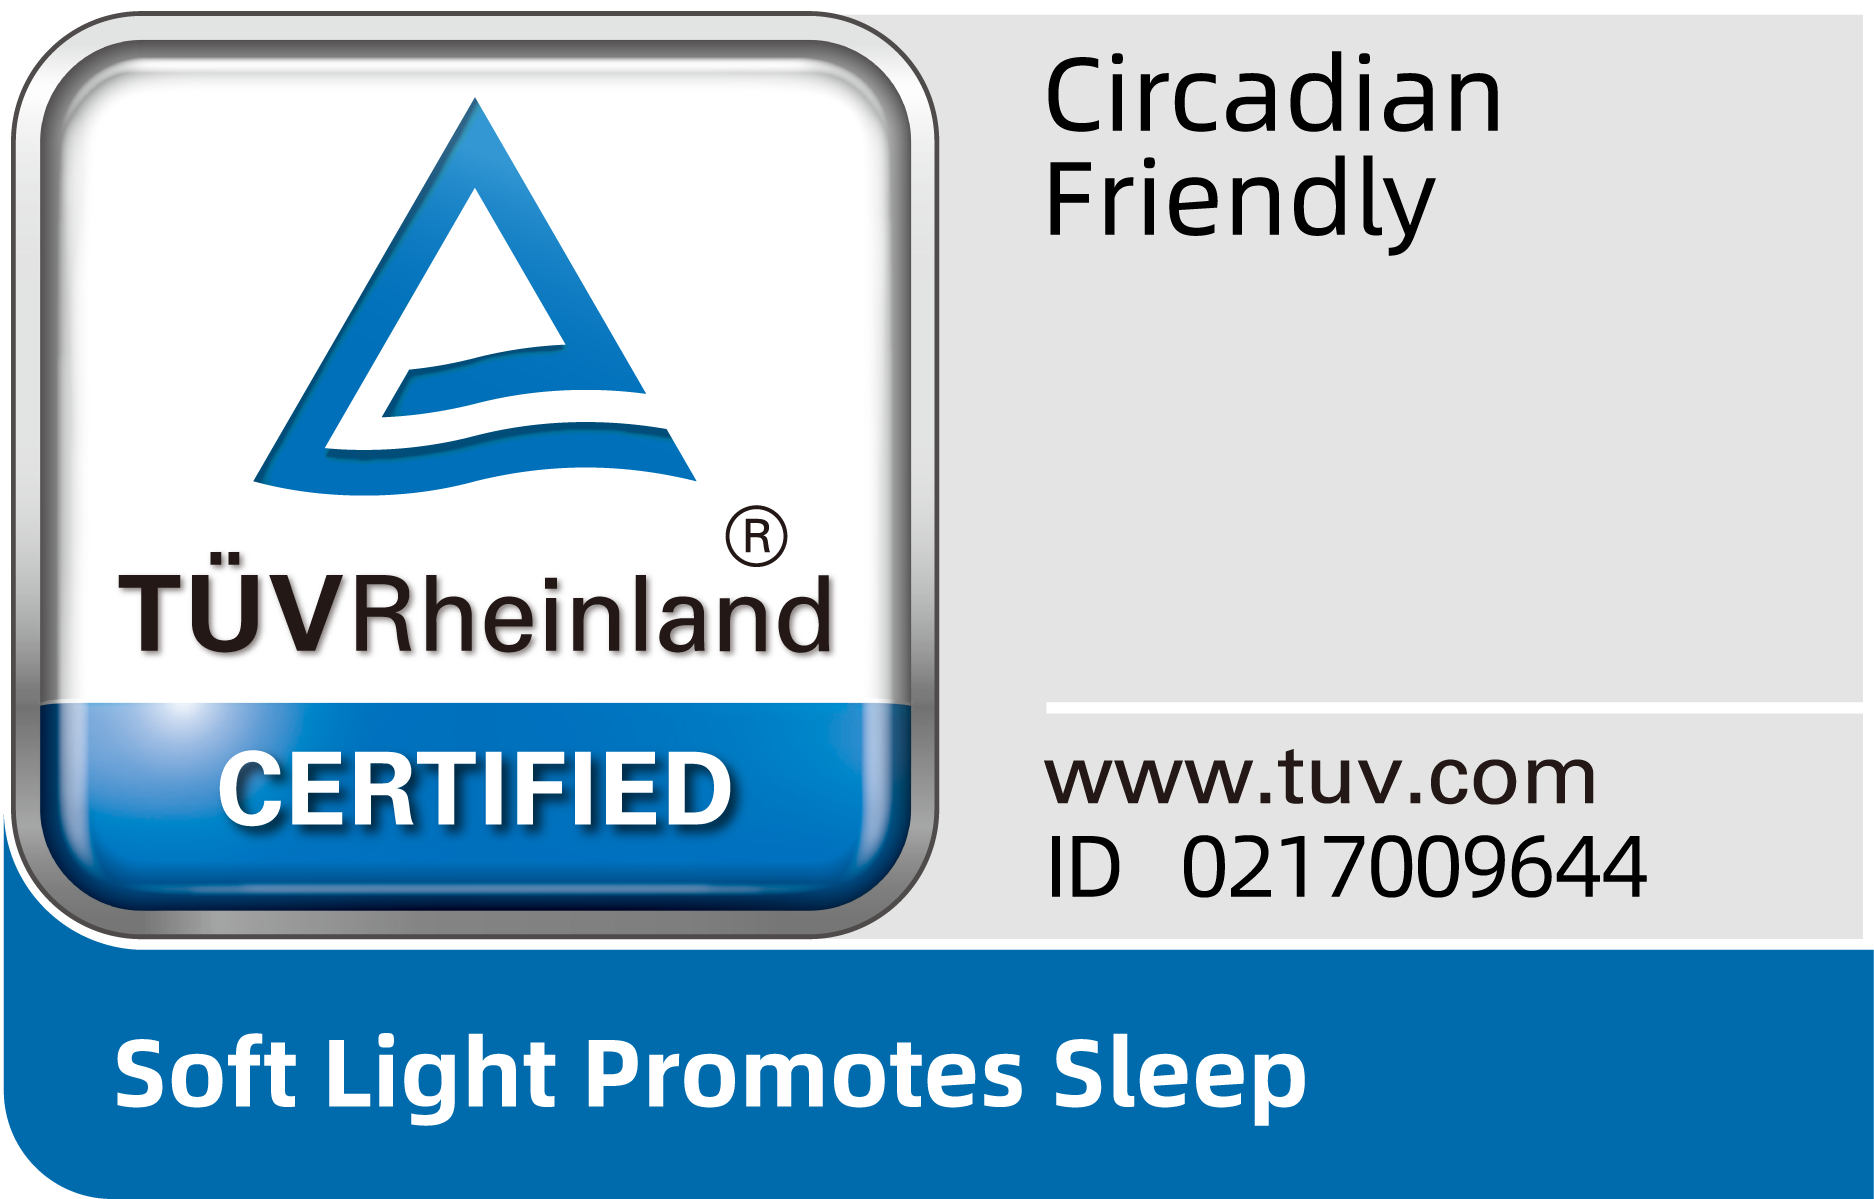 Certifikace Circadian Friendly TÜV Rheinland. 2